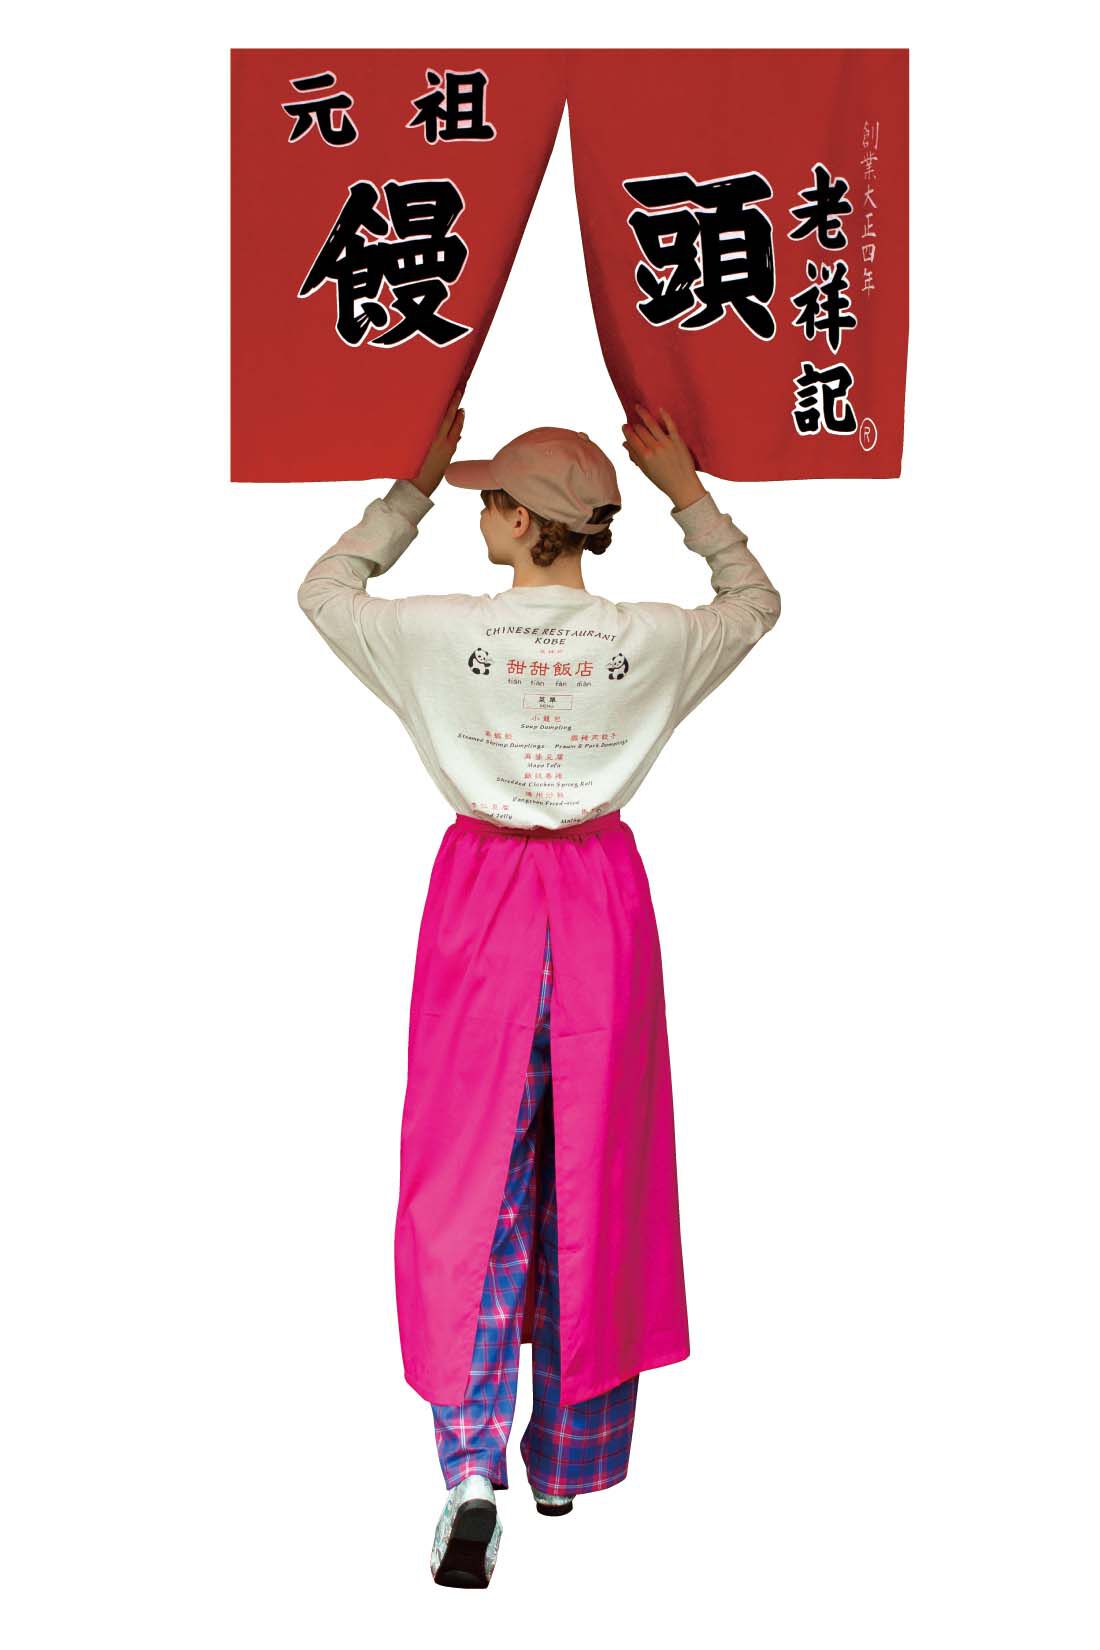 Real Stock|妄想中華食堂スタッフエプロン風巻きスカート